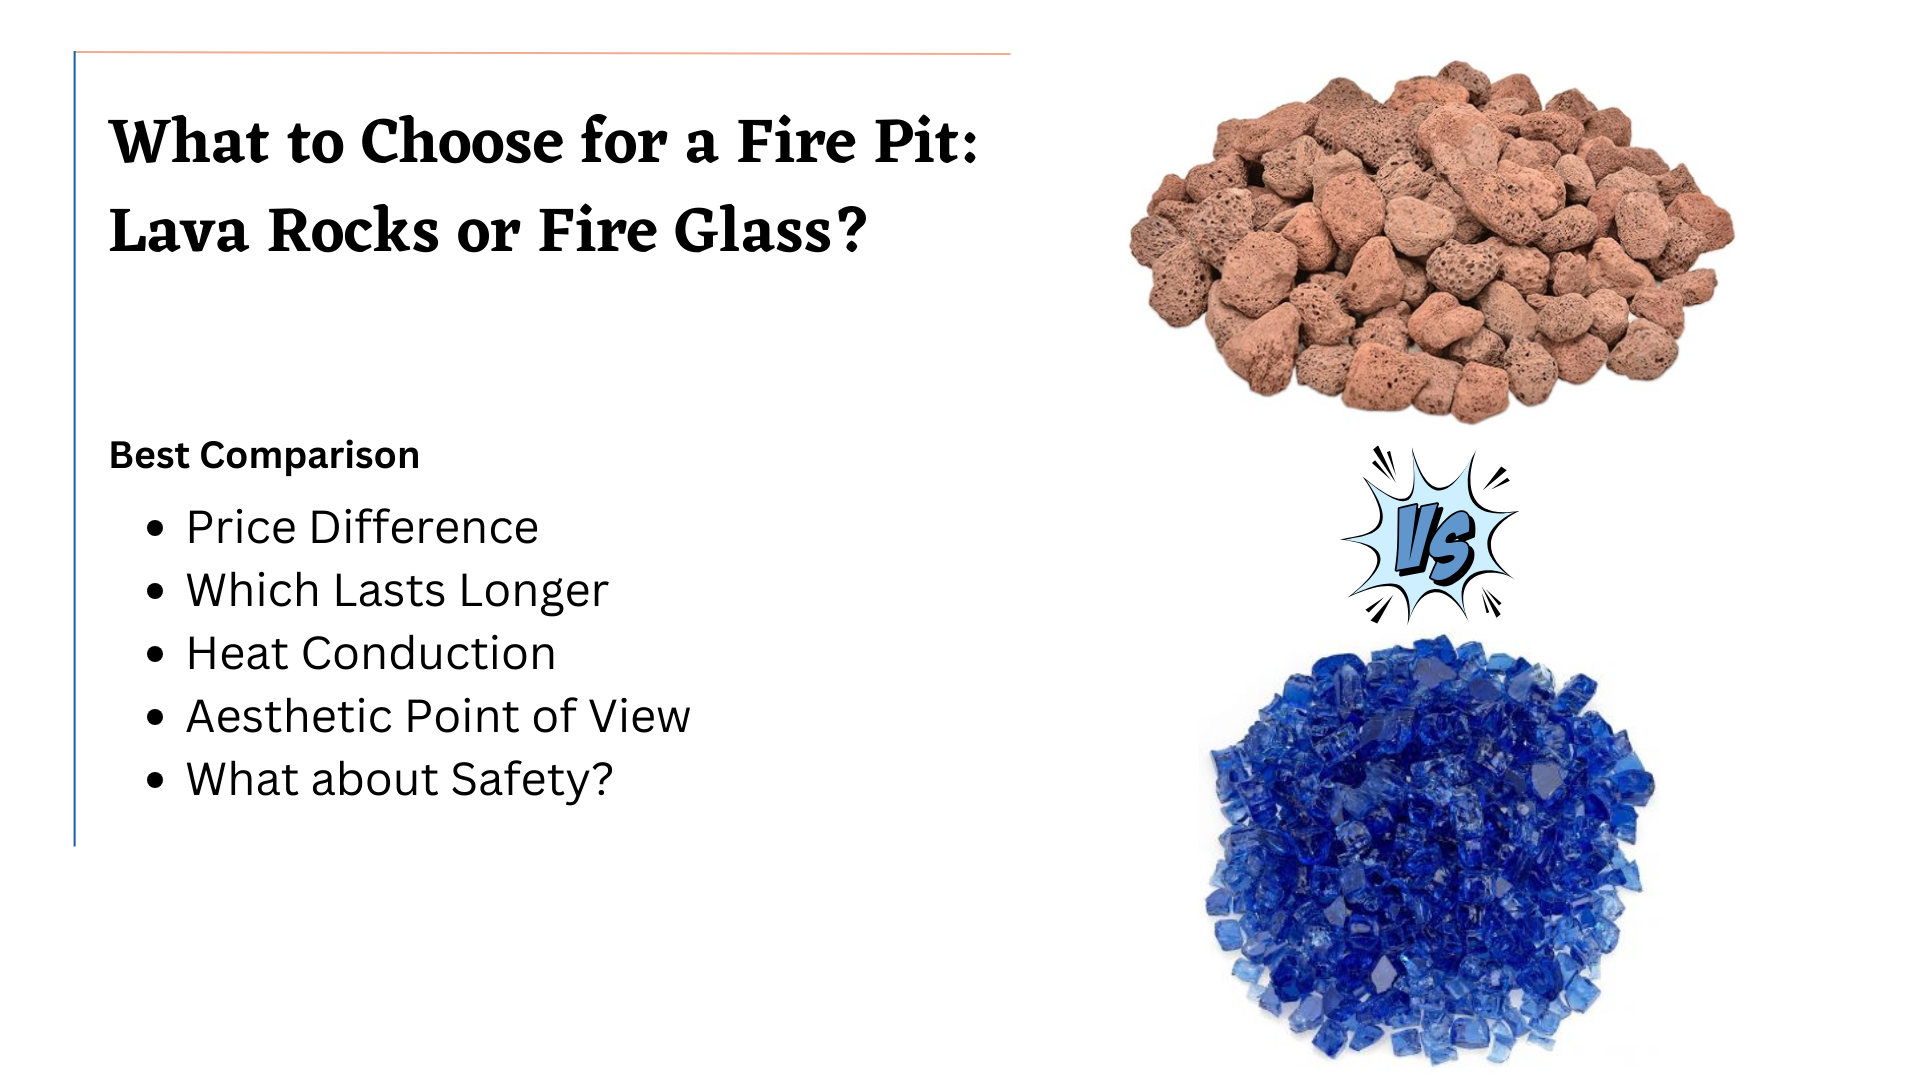 The comparison of lava rocks and fire glass